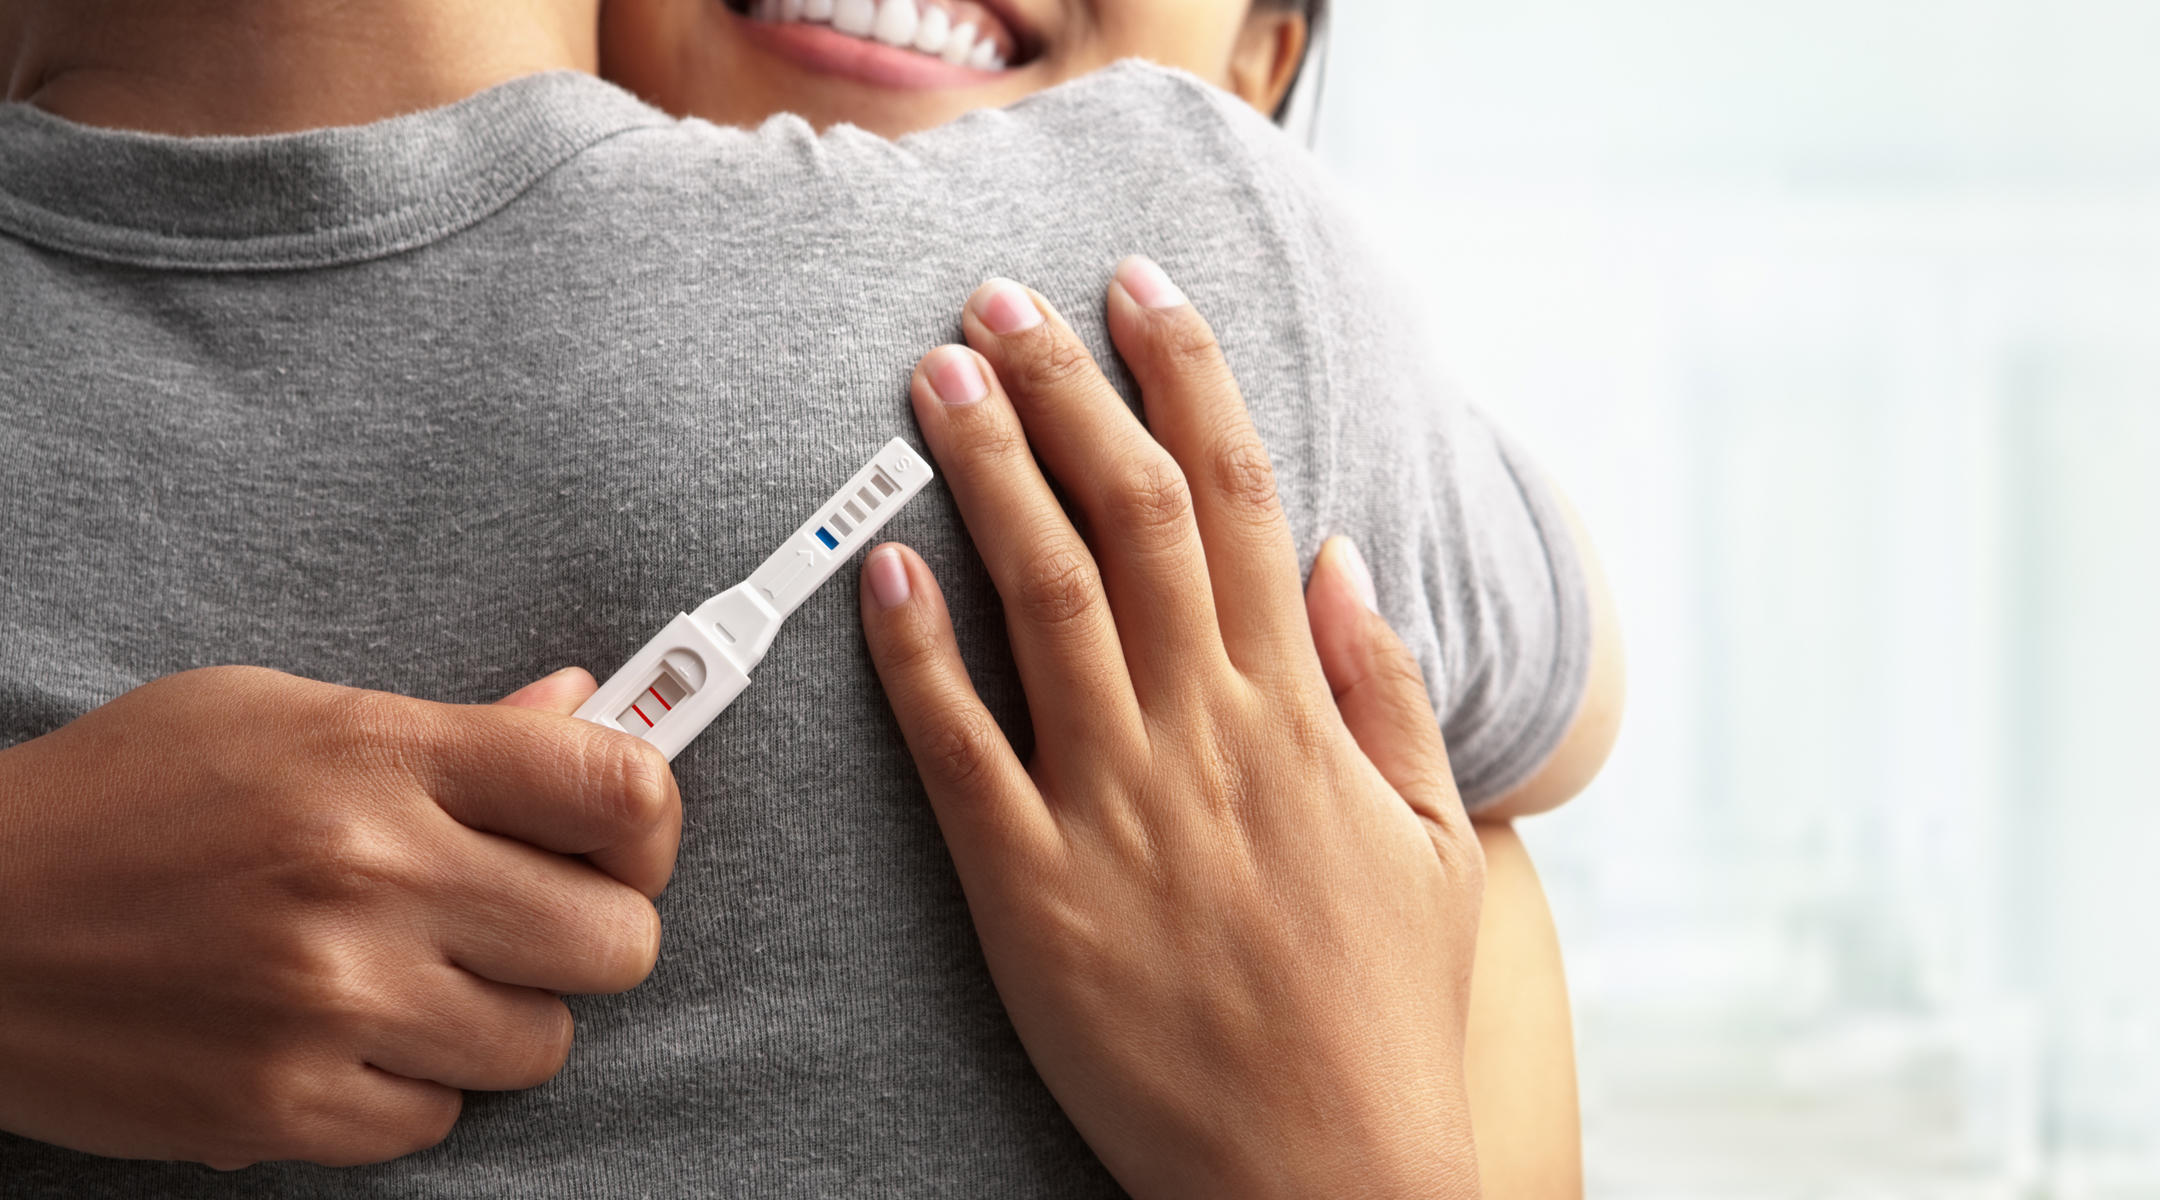 Signs of pregnancy | علایم بارداری | علائم بارداری